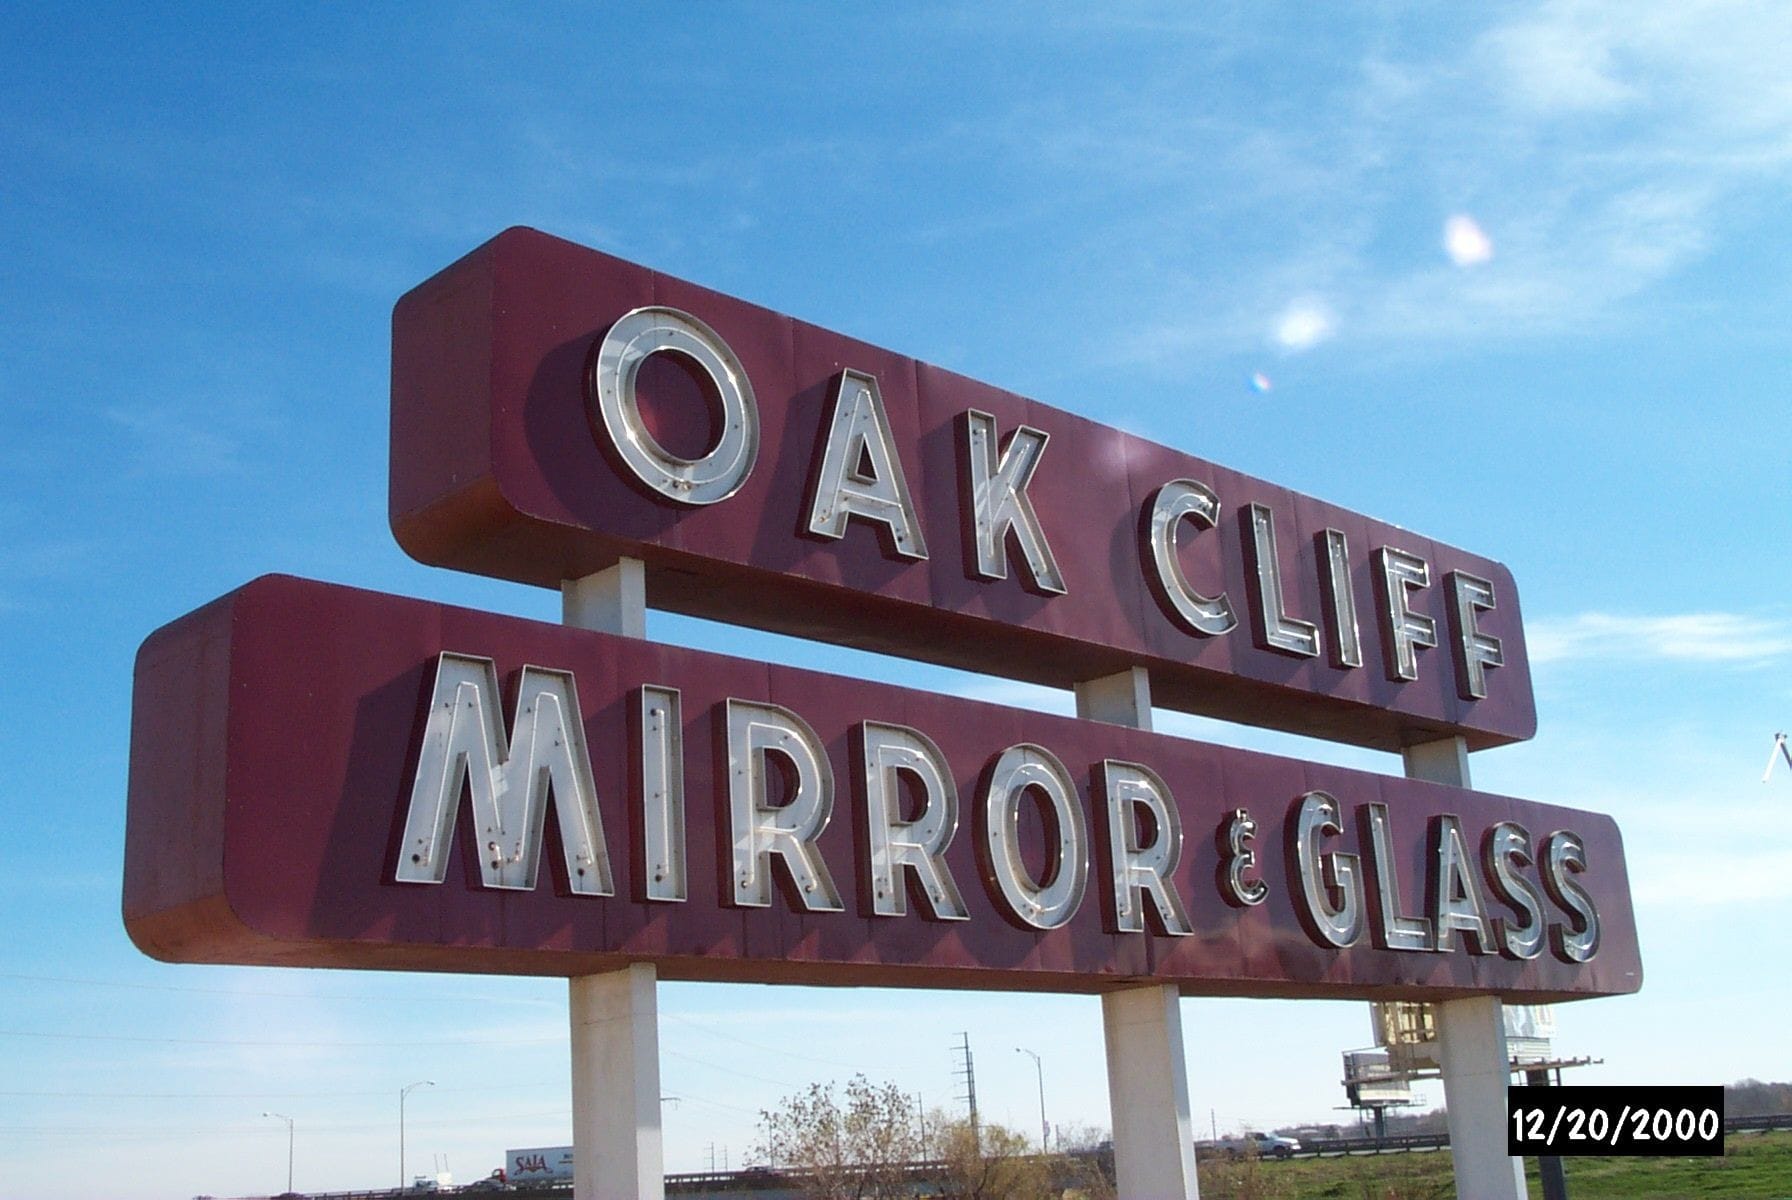 Oak Cliff Mirror & Glass